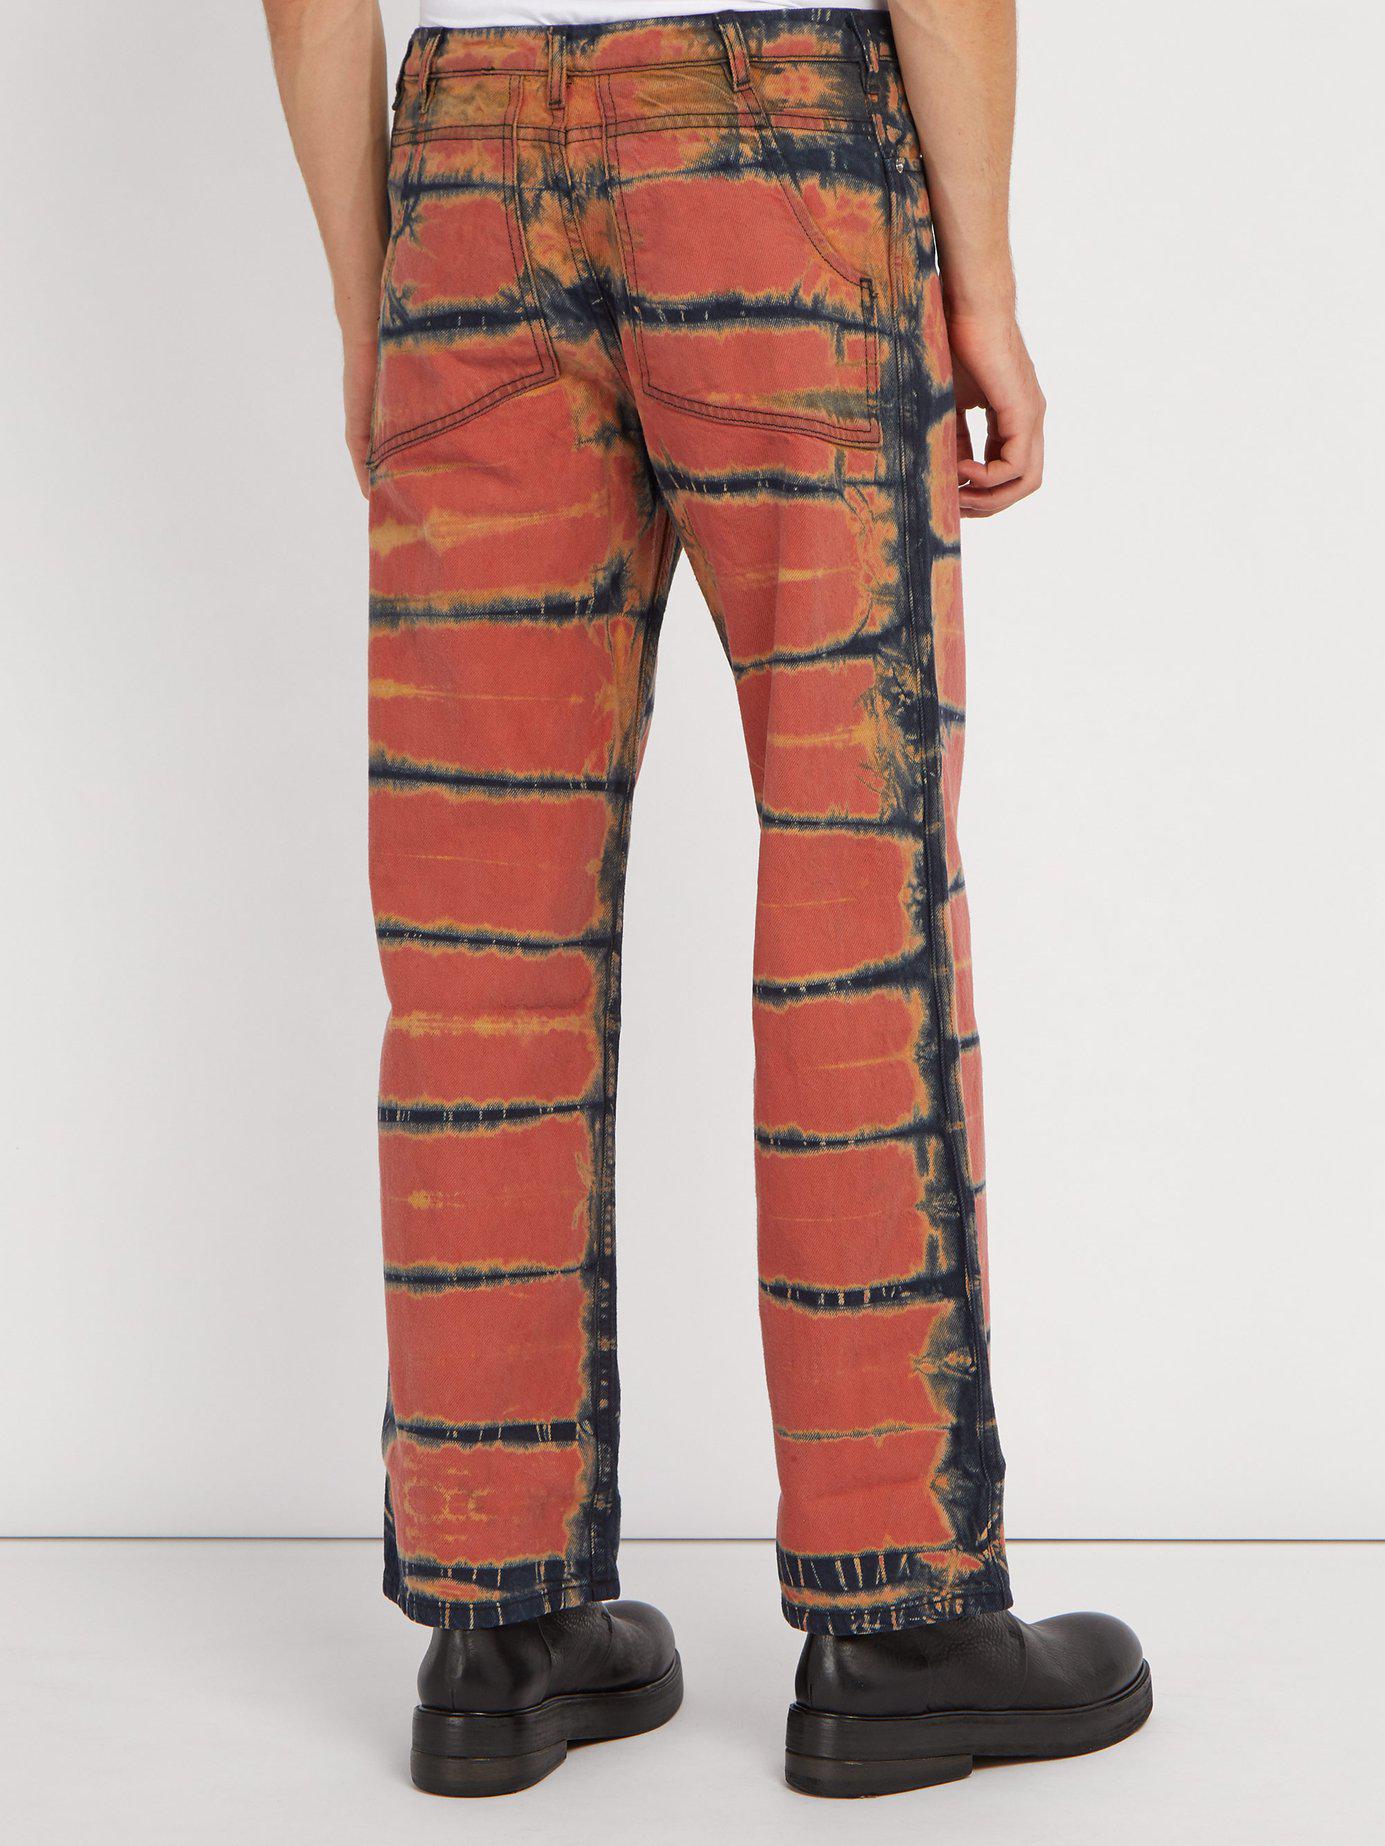 Eckhaus Latta Denim Shibori-dyed Jeans in Red for Men - Lyst